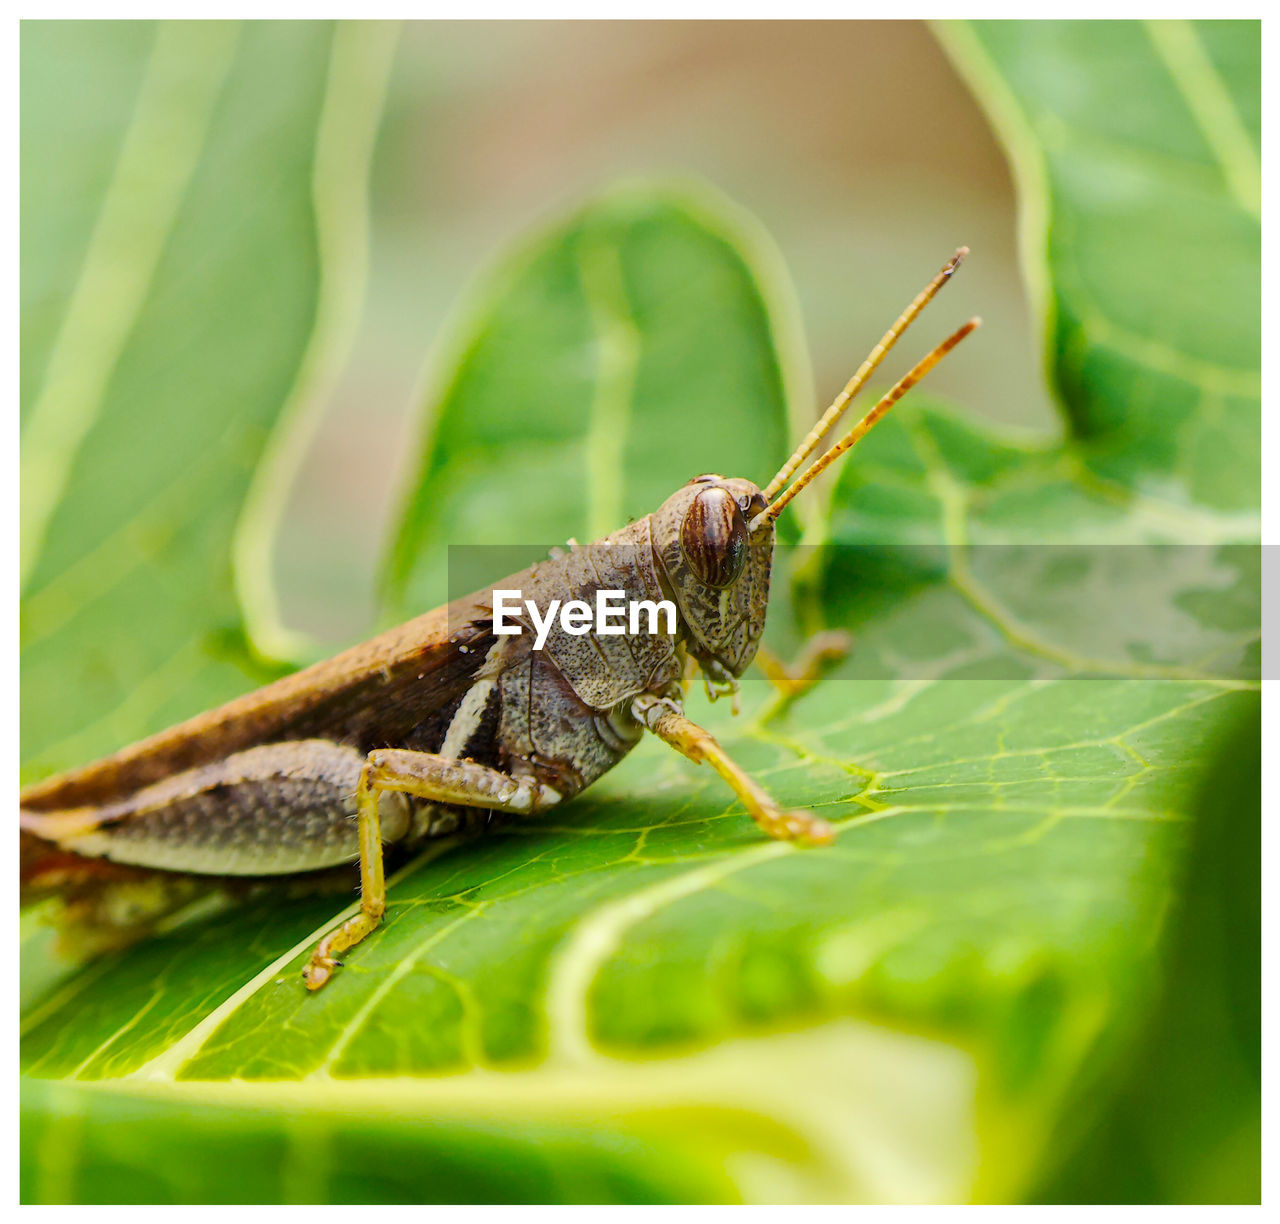 close-up of grasshopper on grass